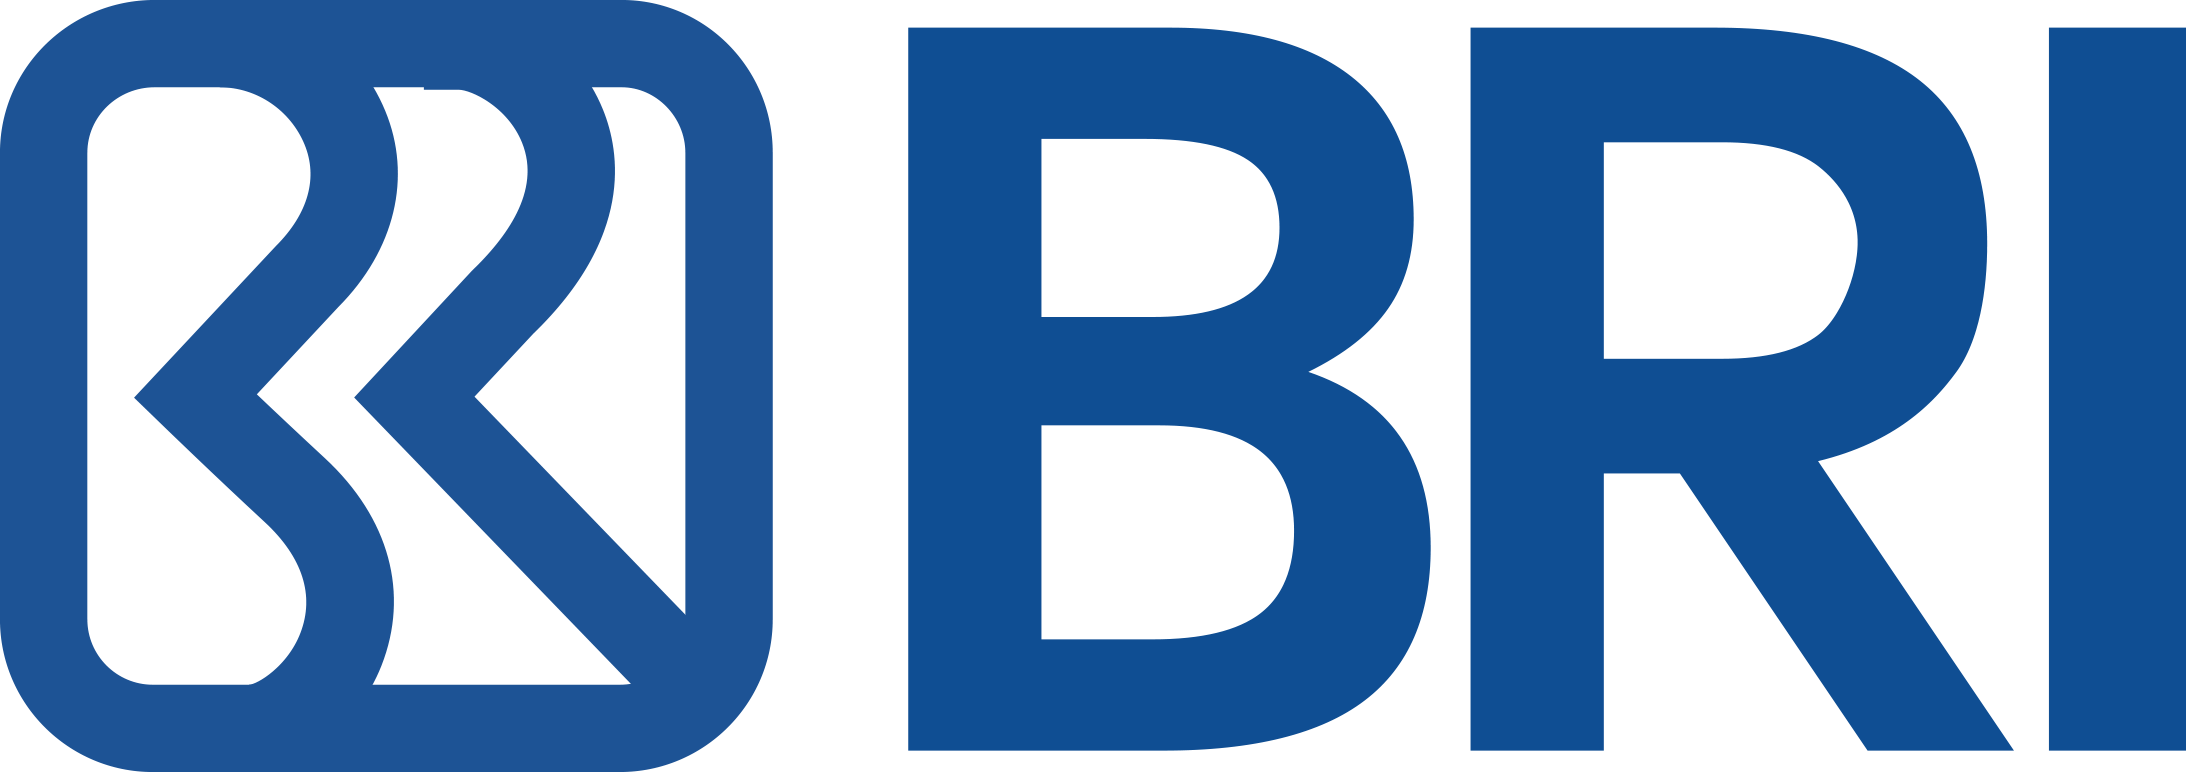 logo-bank-BRI-baru_237-design.png